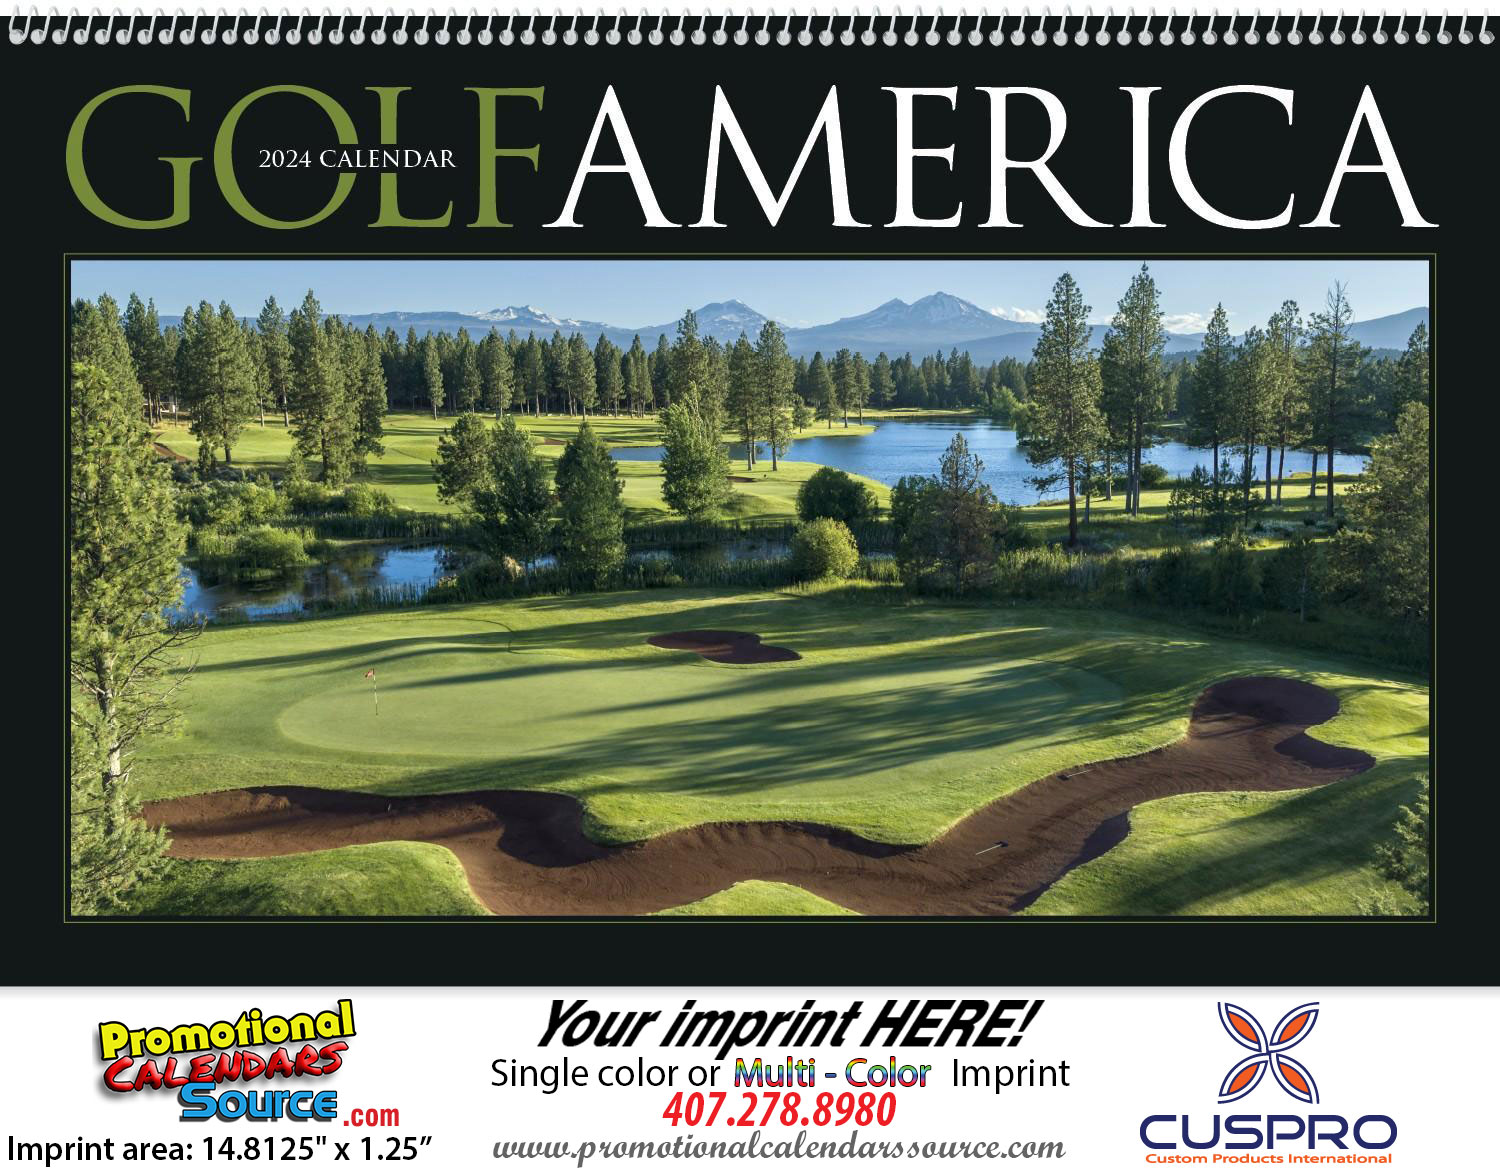 Golf America Promotional Calendar 